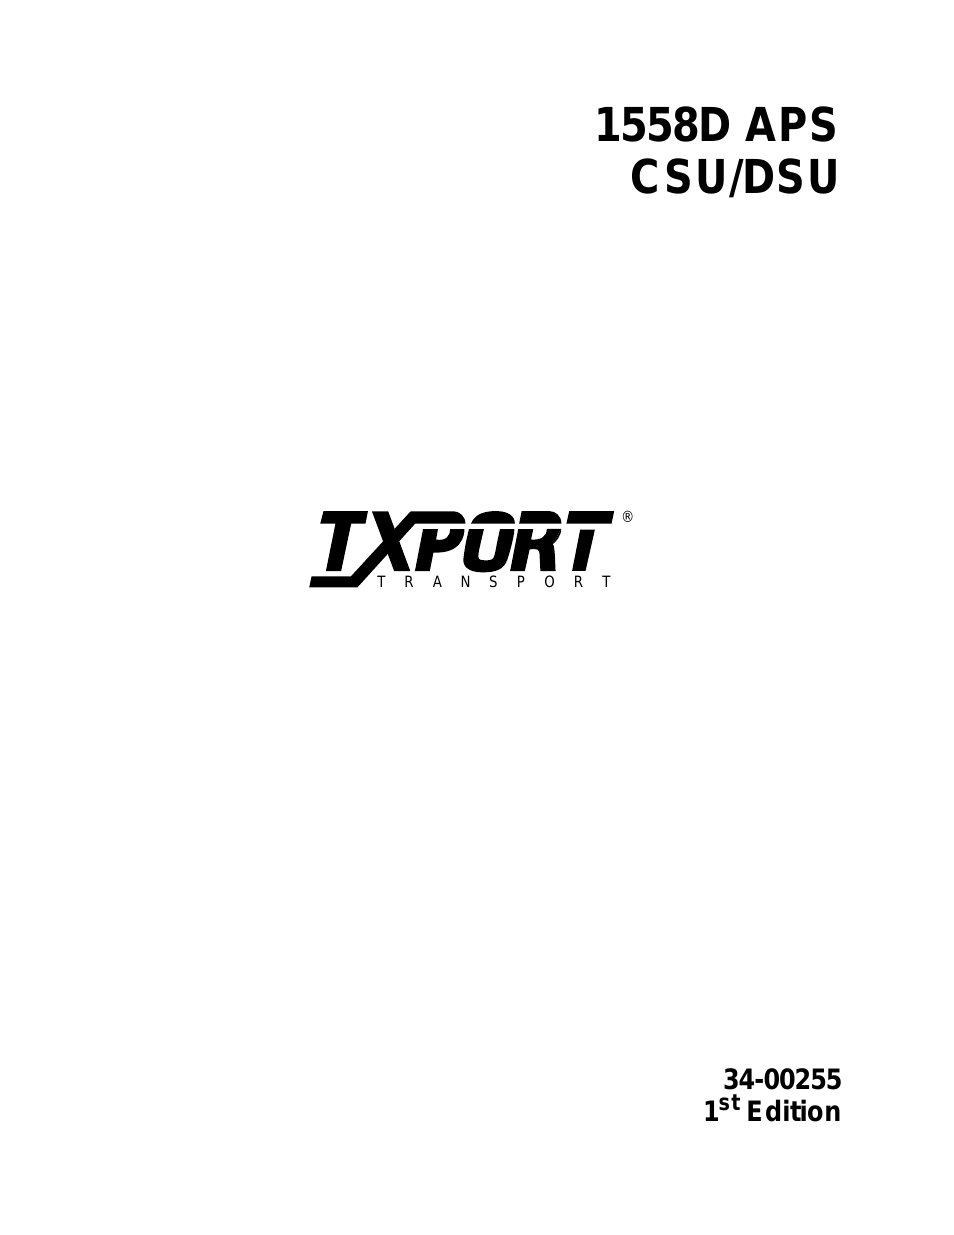 1558D (34-00255) Product Manual